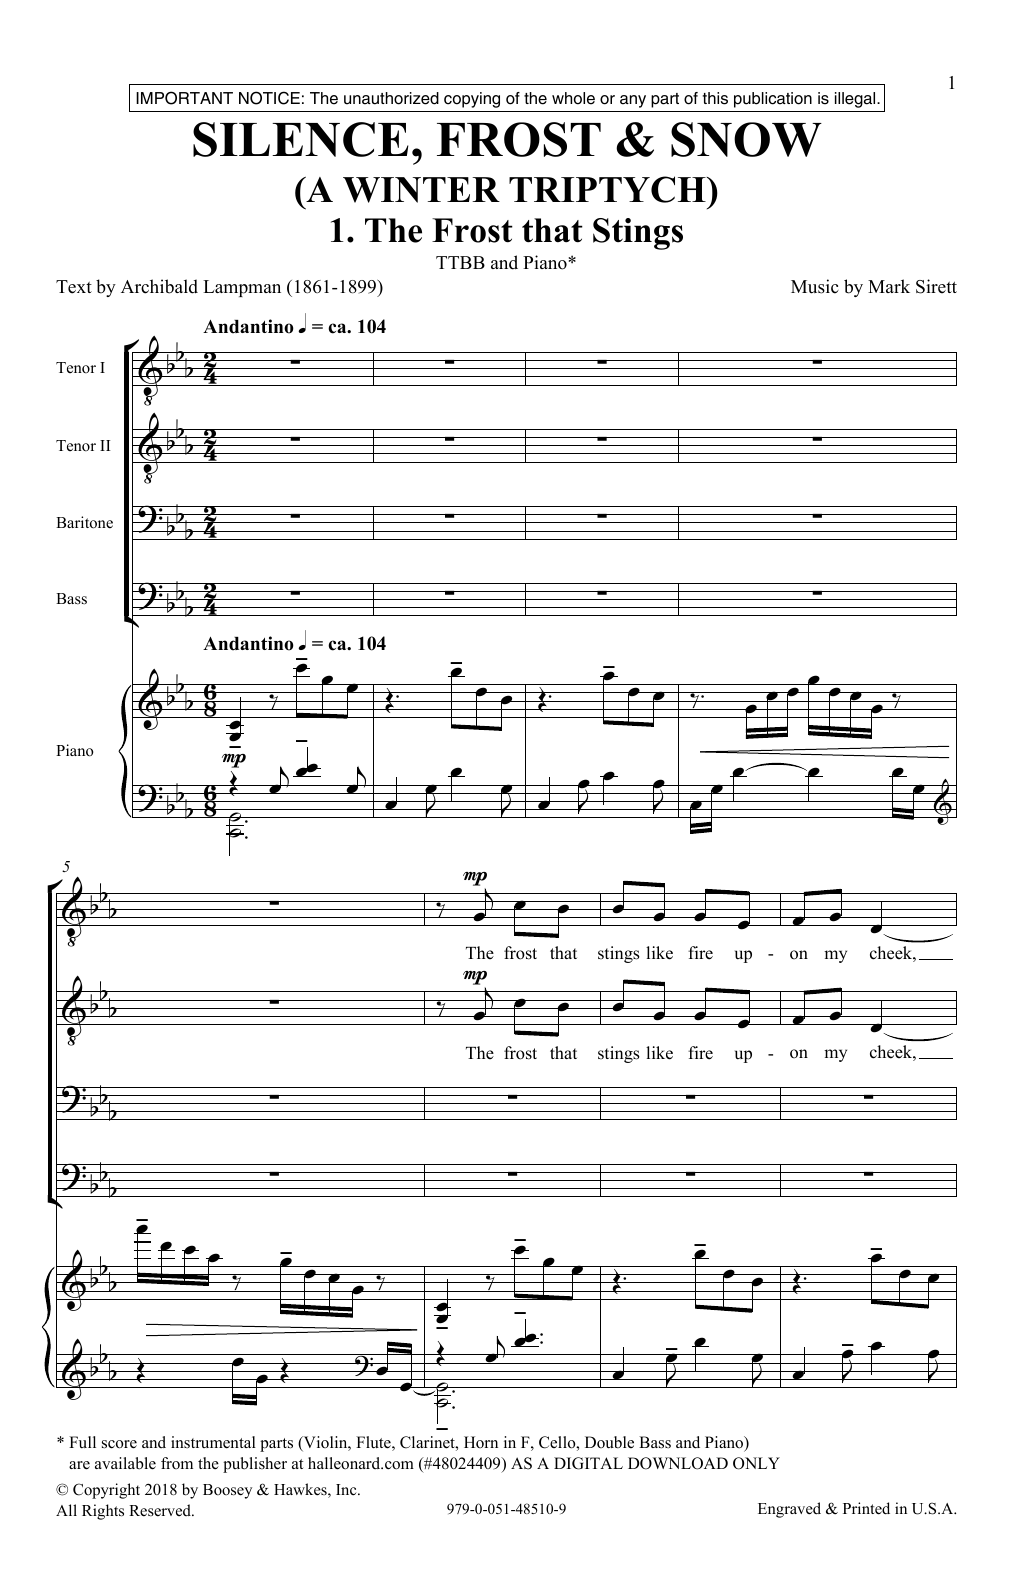 Mark Sirett Silence, Frost & Beauty (A Winter Triptych) Sheet Music Notes & Chords for TTBB Choir - Download or Print PDF